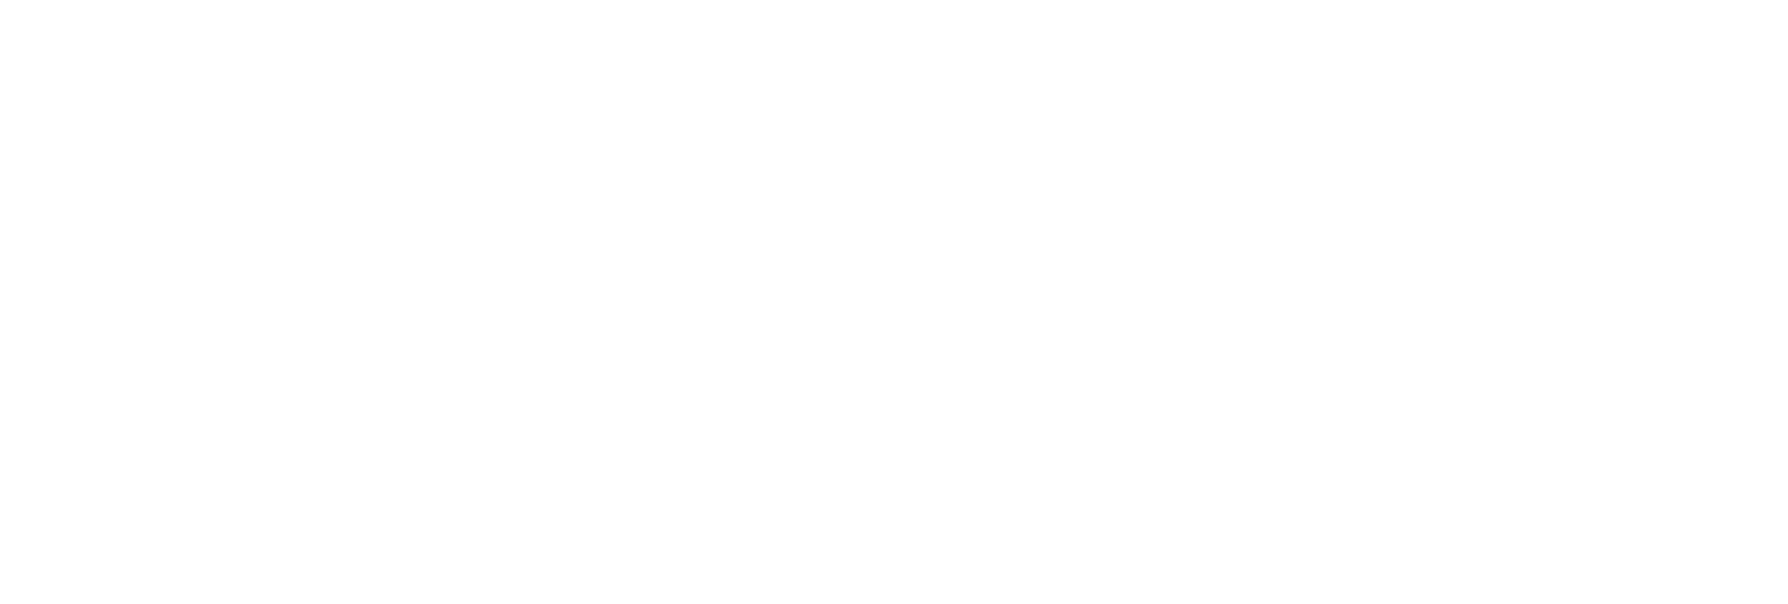 Love in Glacier National: A National Park Romance logo